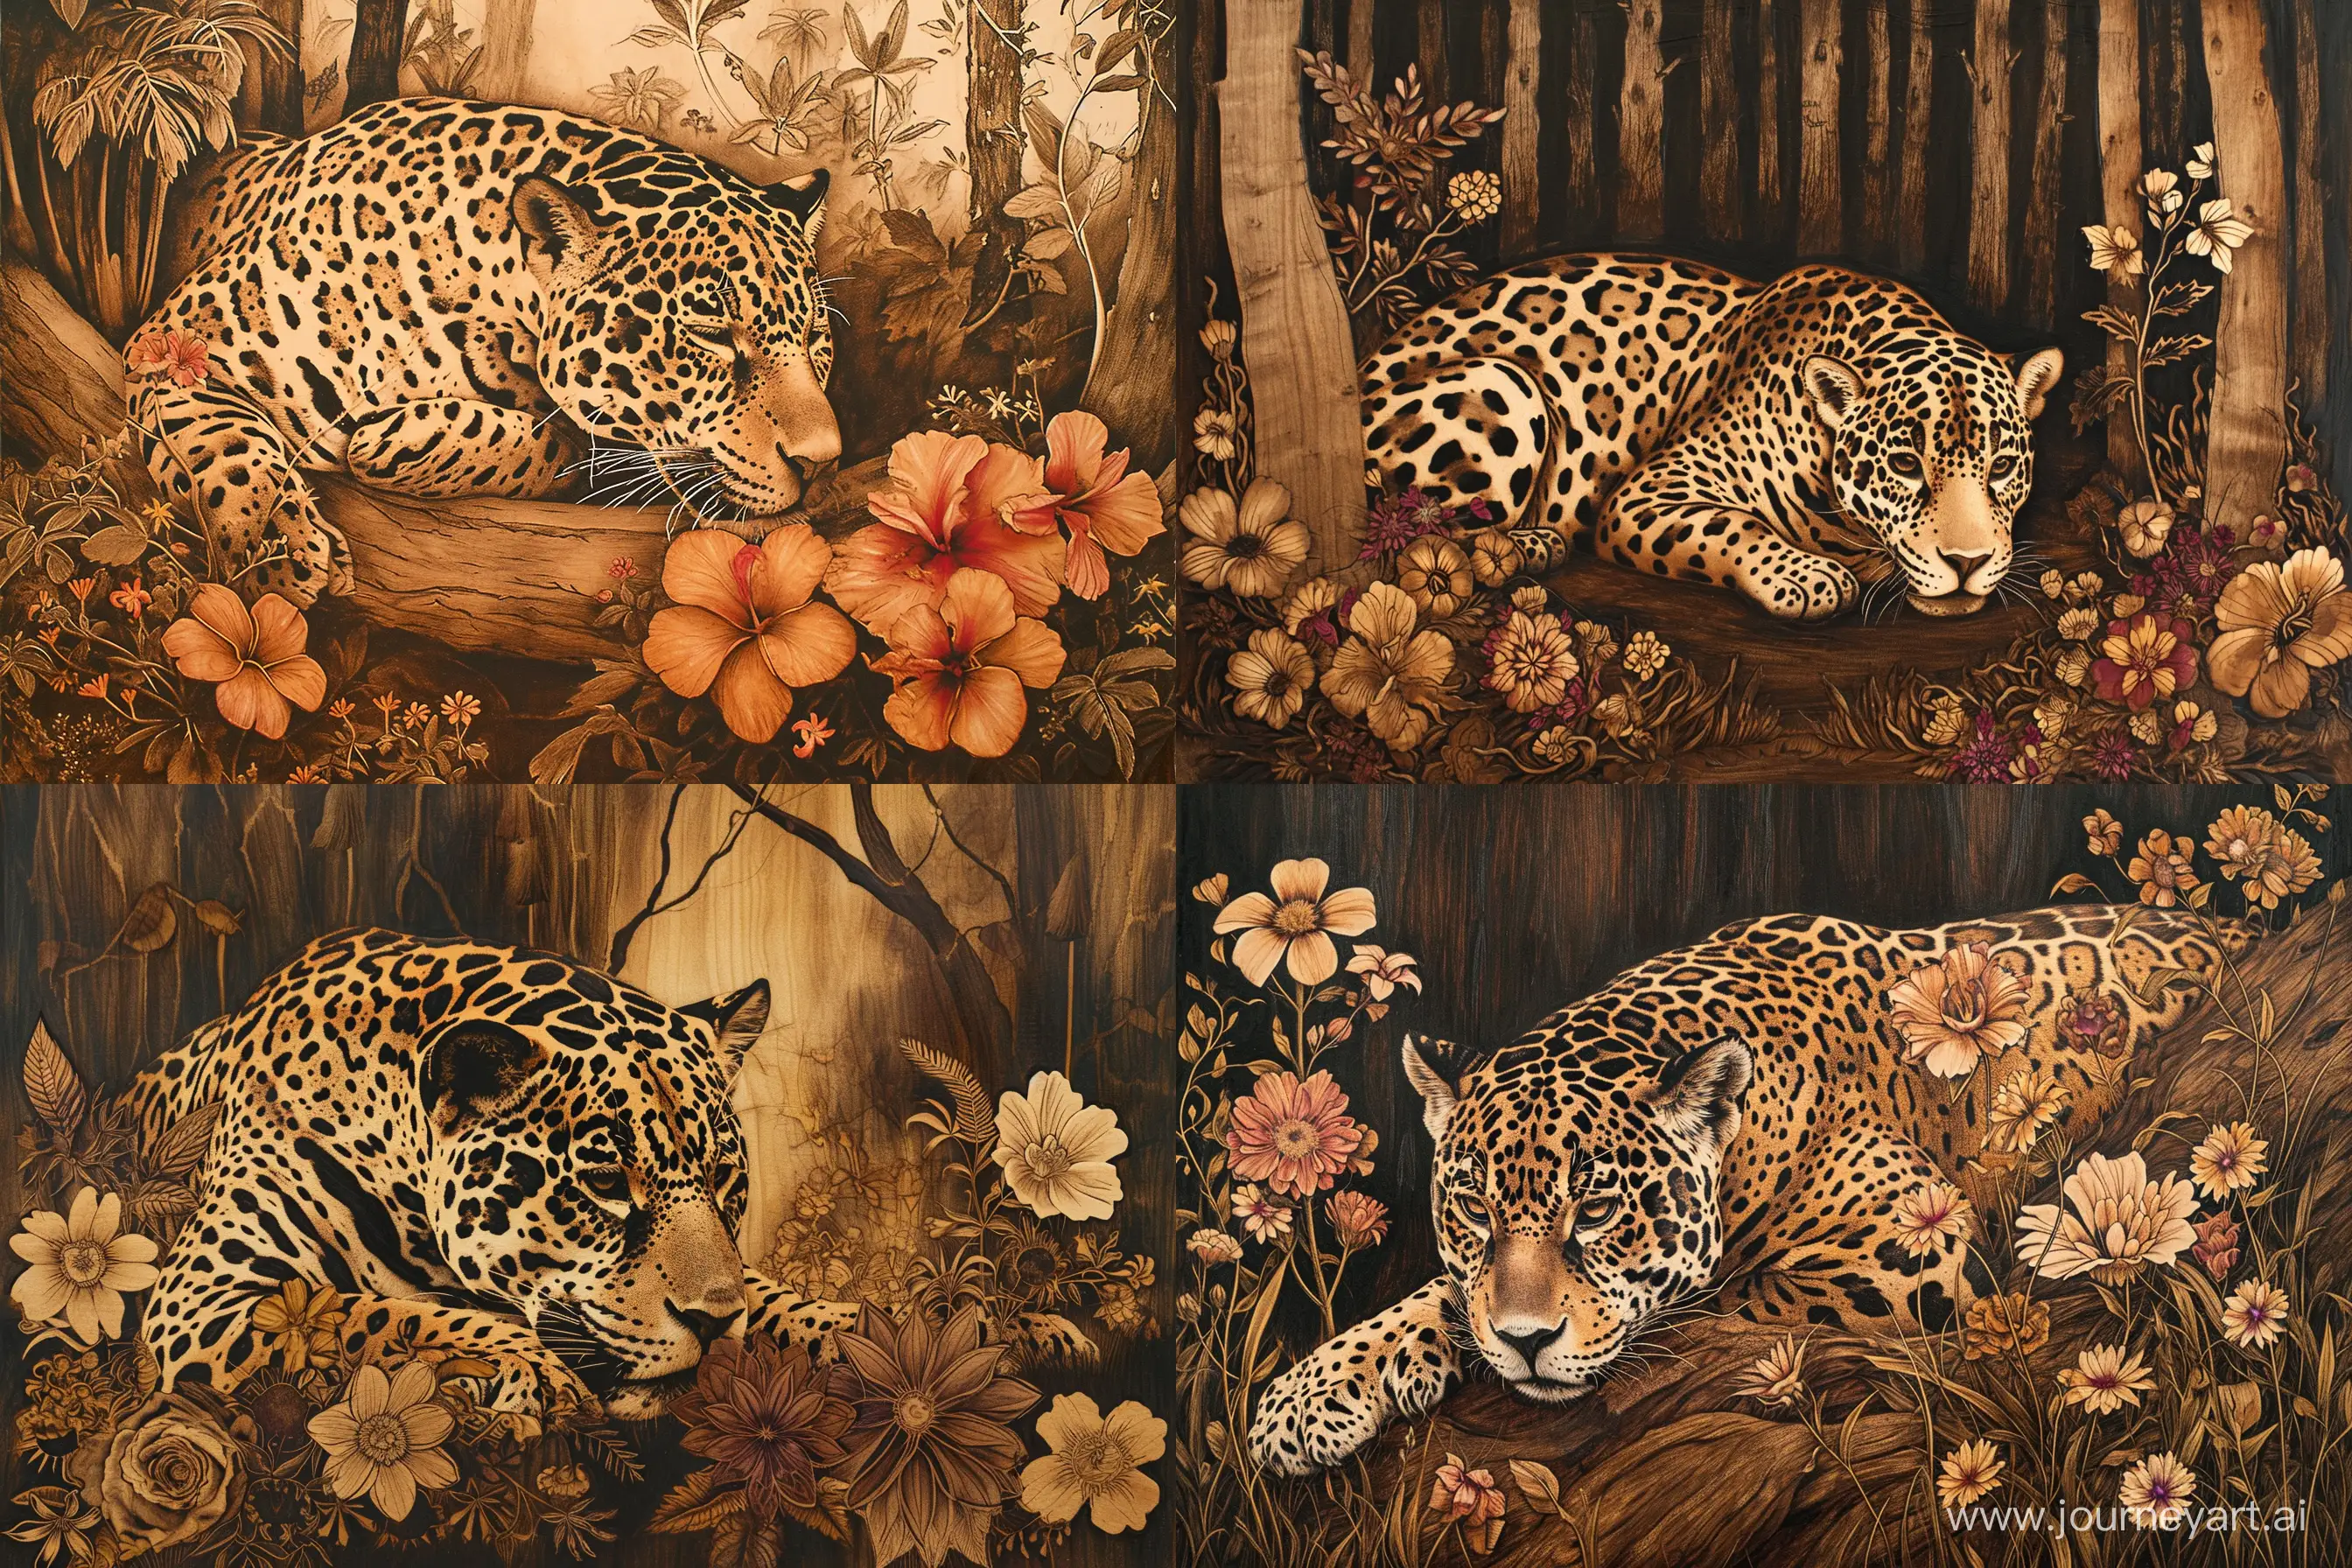 Jaguar-Pyrography-Majestic-Cat-Amidst-Floral-Forest